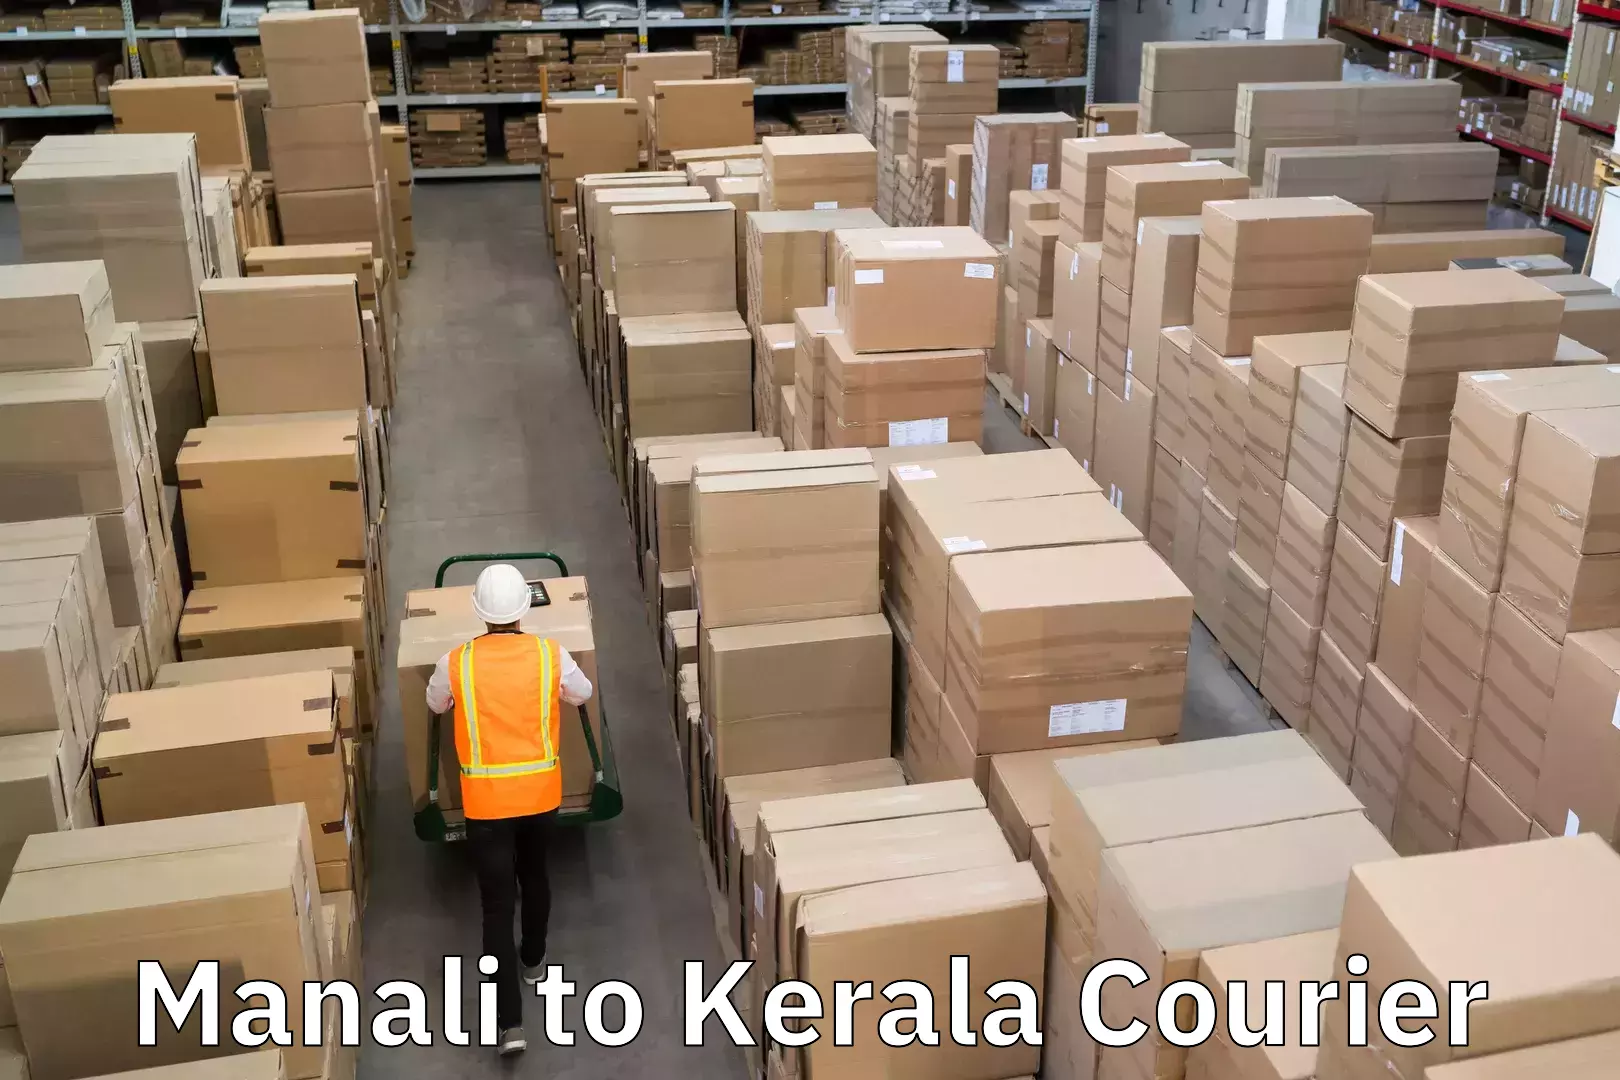 Seamless shipping experience Manali to Kerala